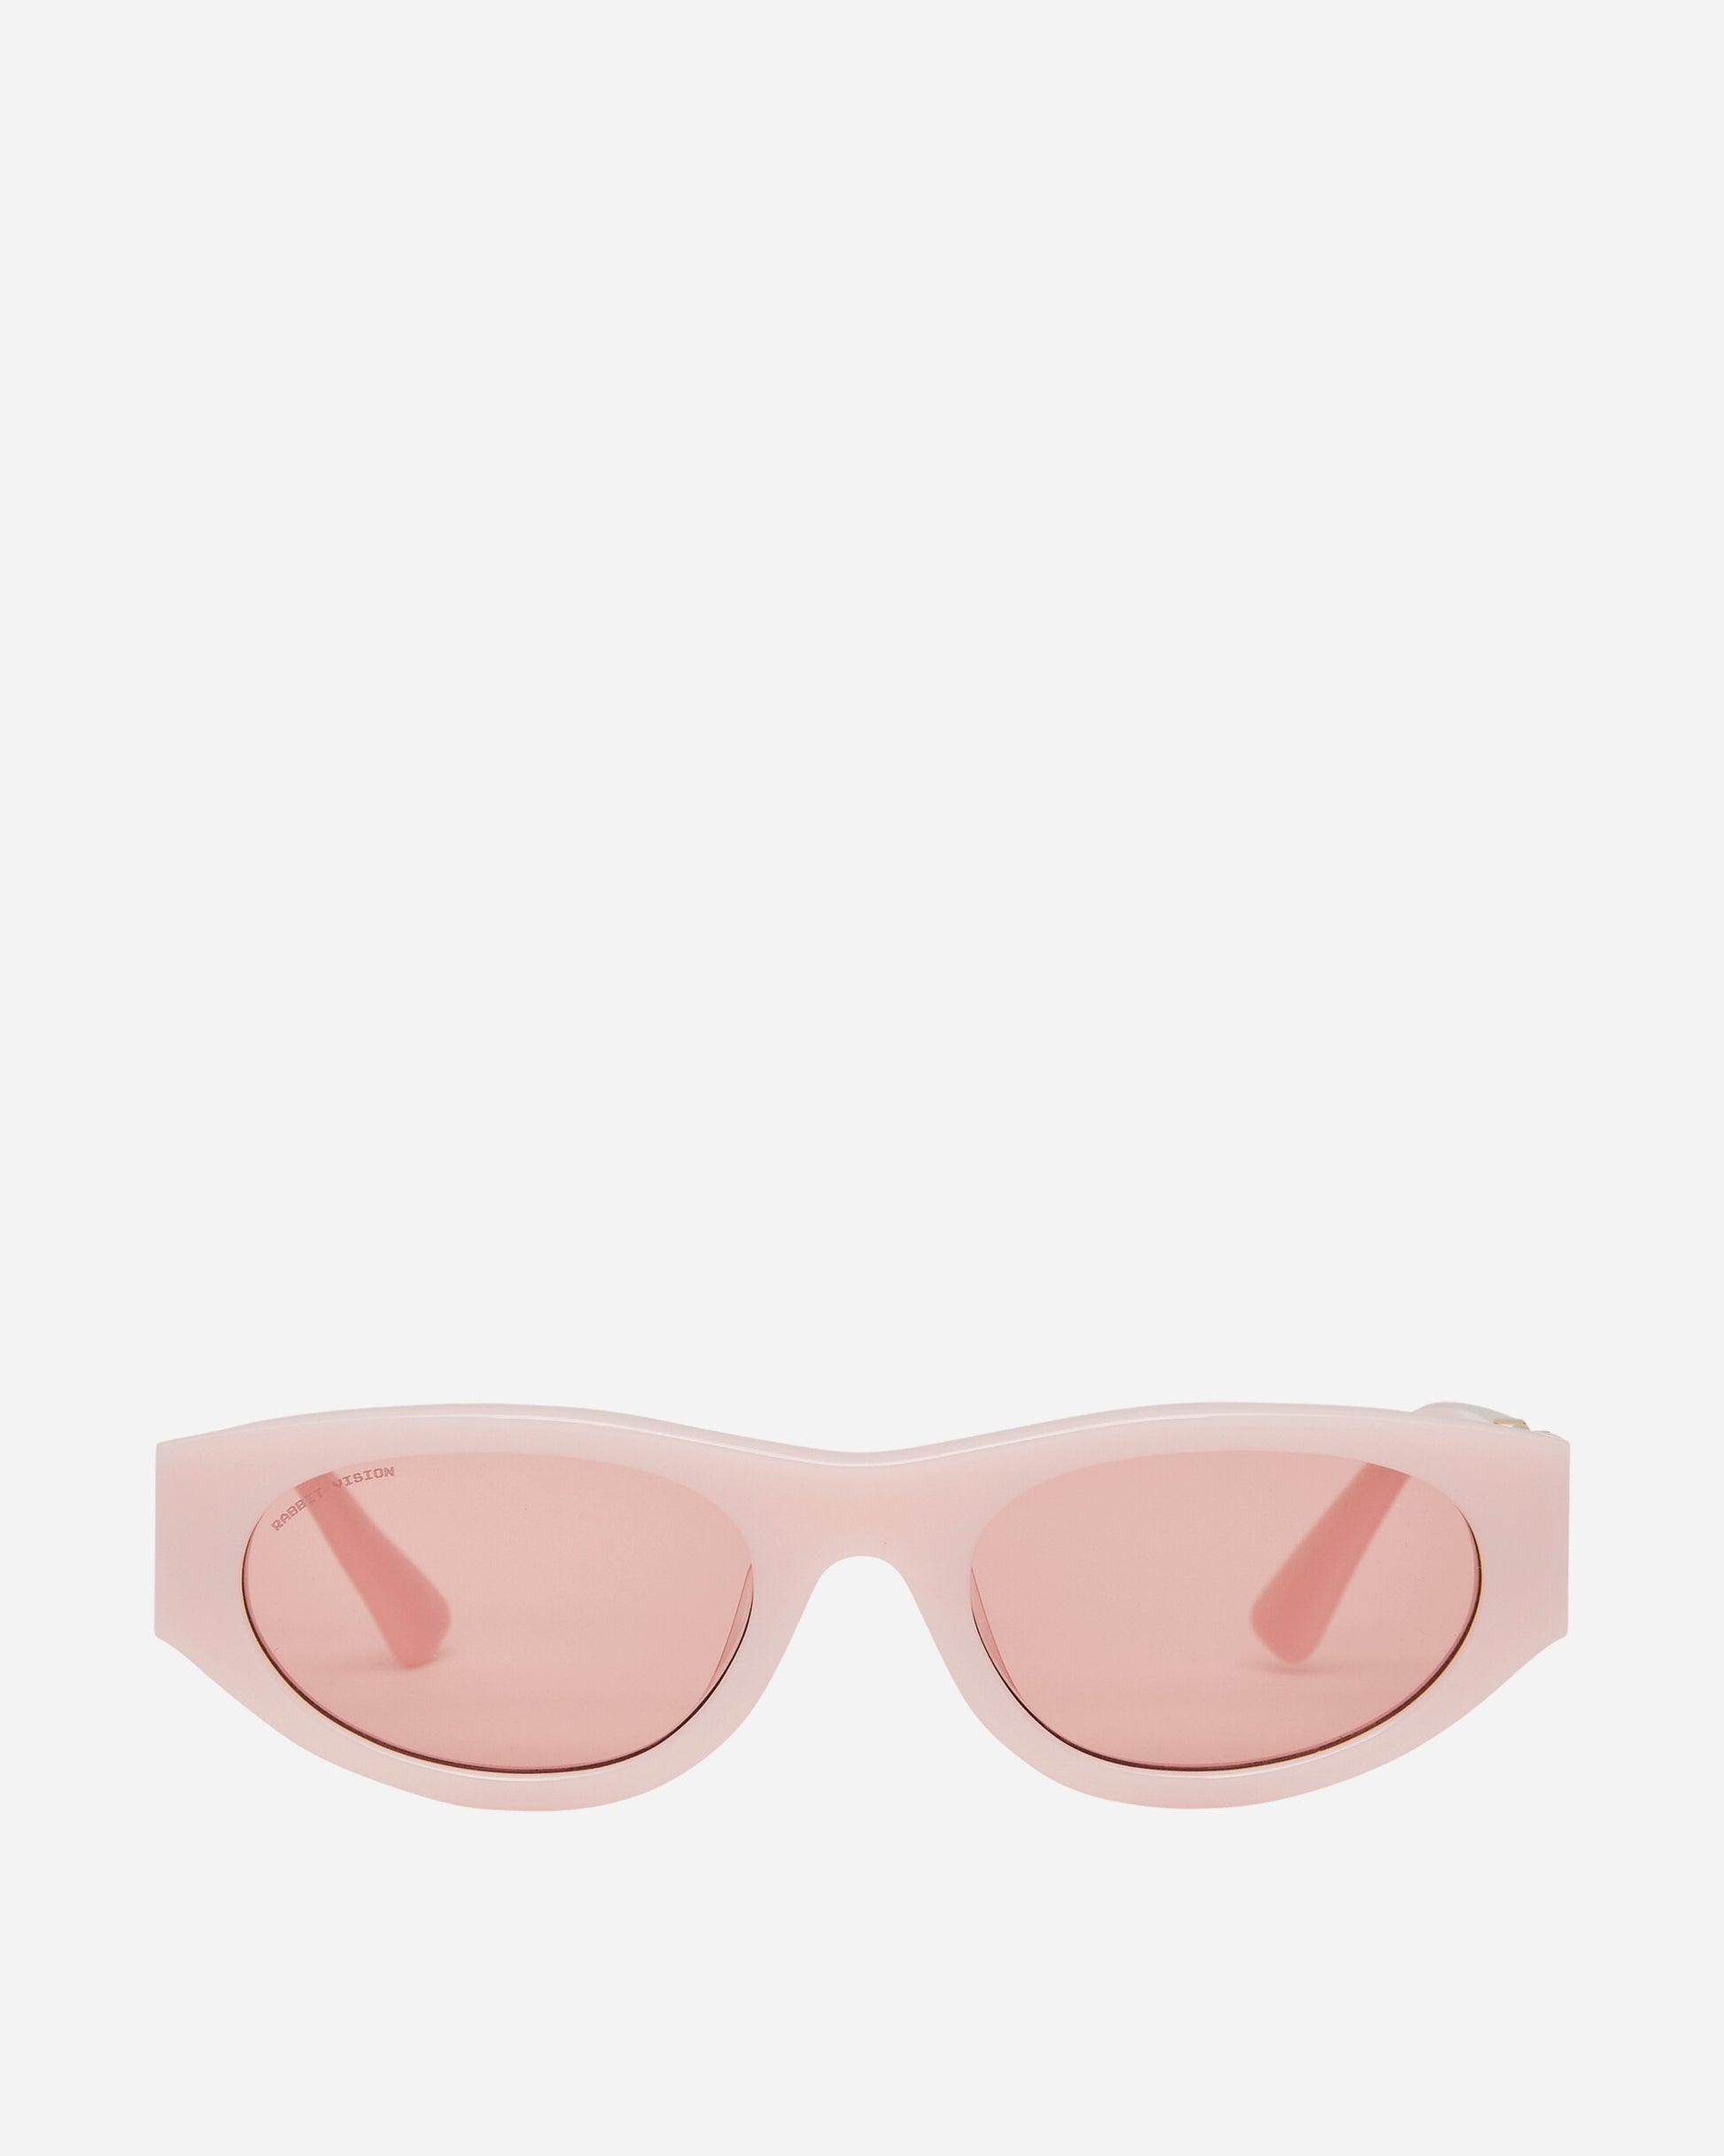 AKILA Vertigo X Freddie Gibbs Pink Eyewear Sunglasses 210367 67FG